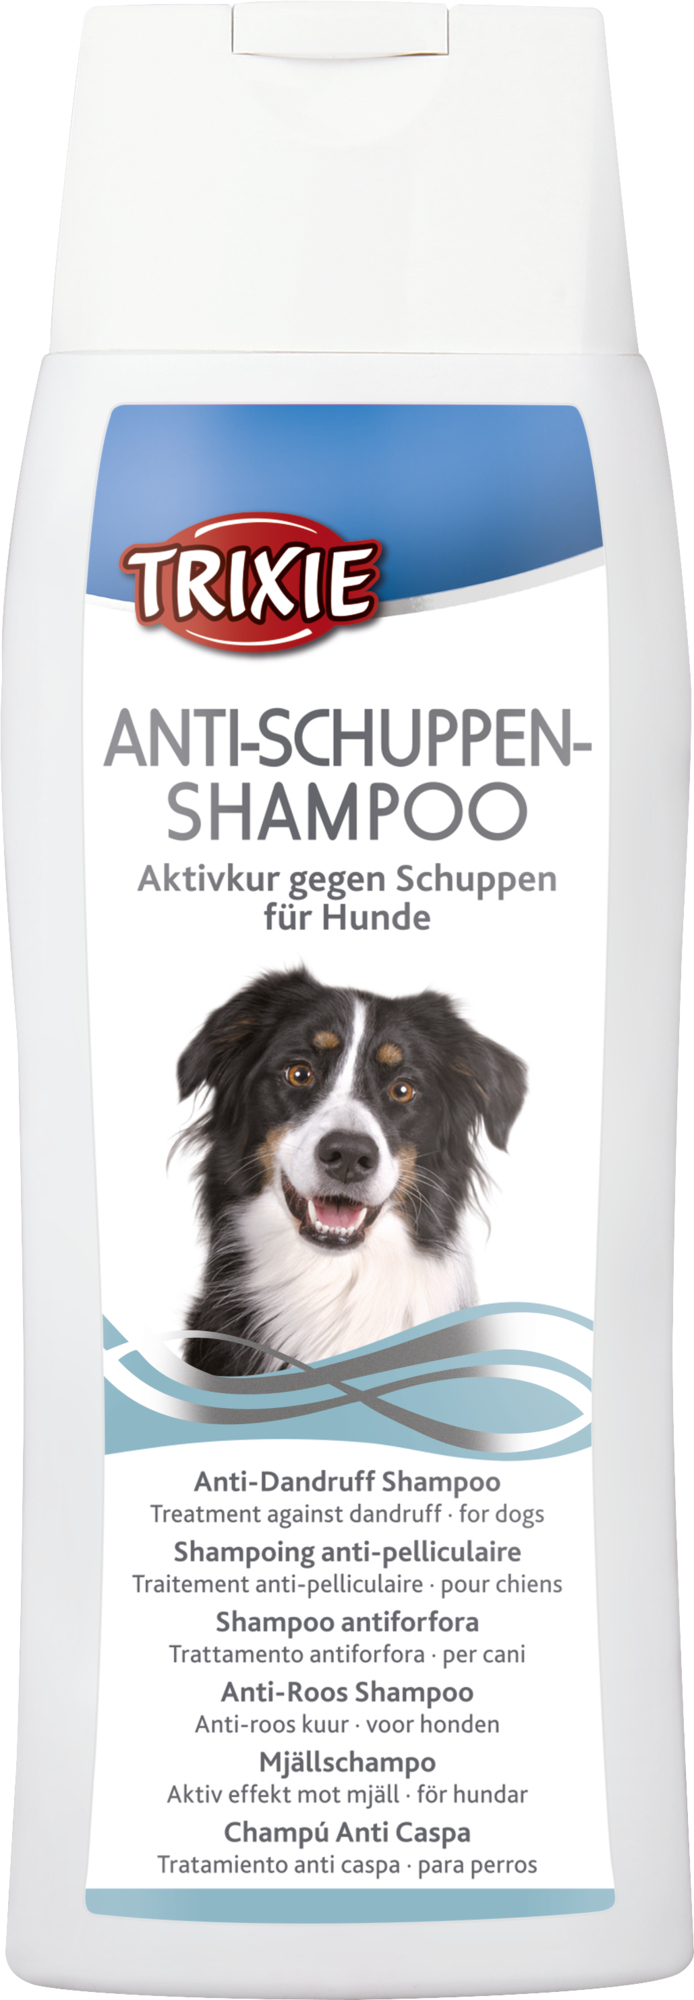 Shampoo antiforfora